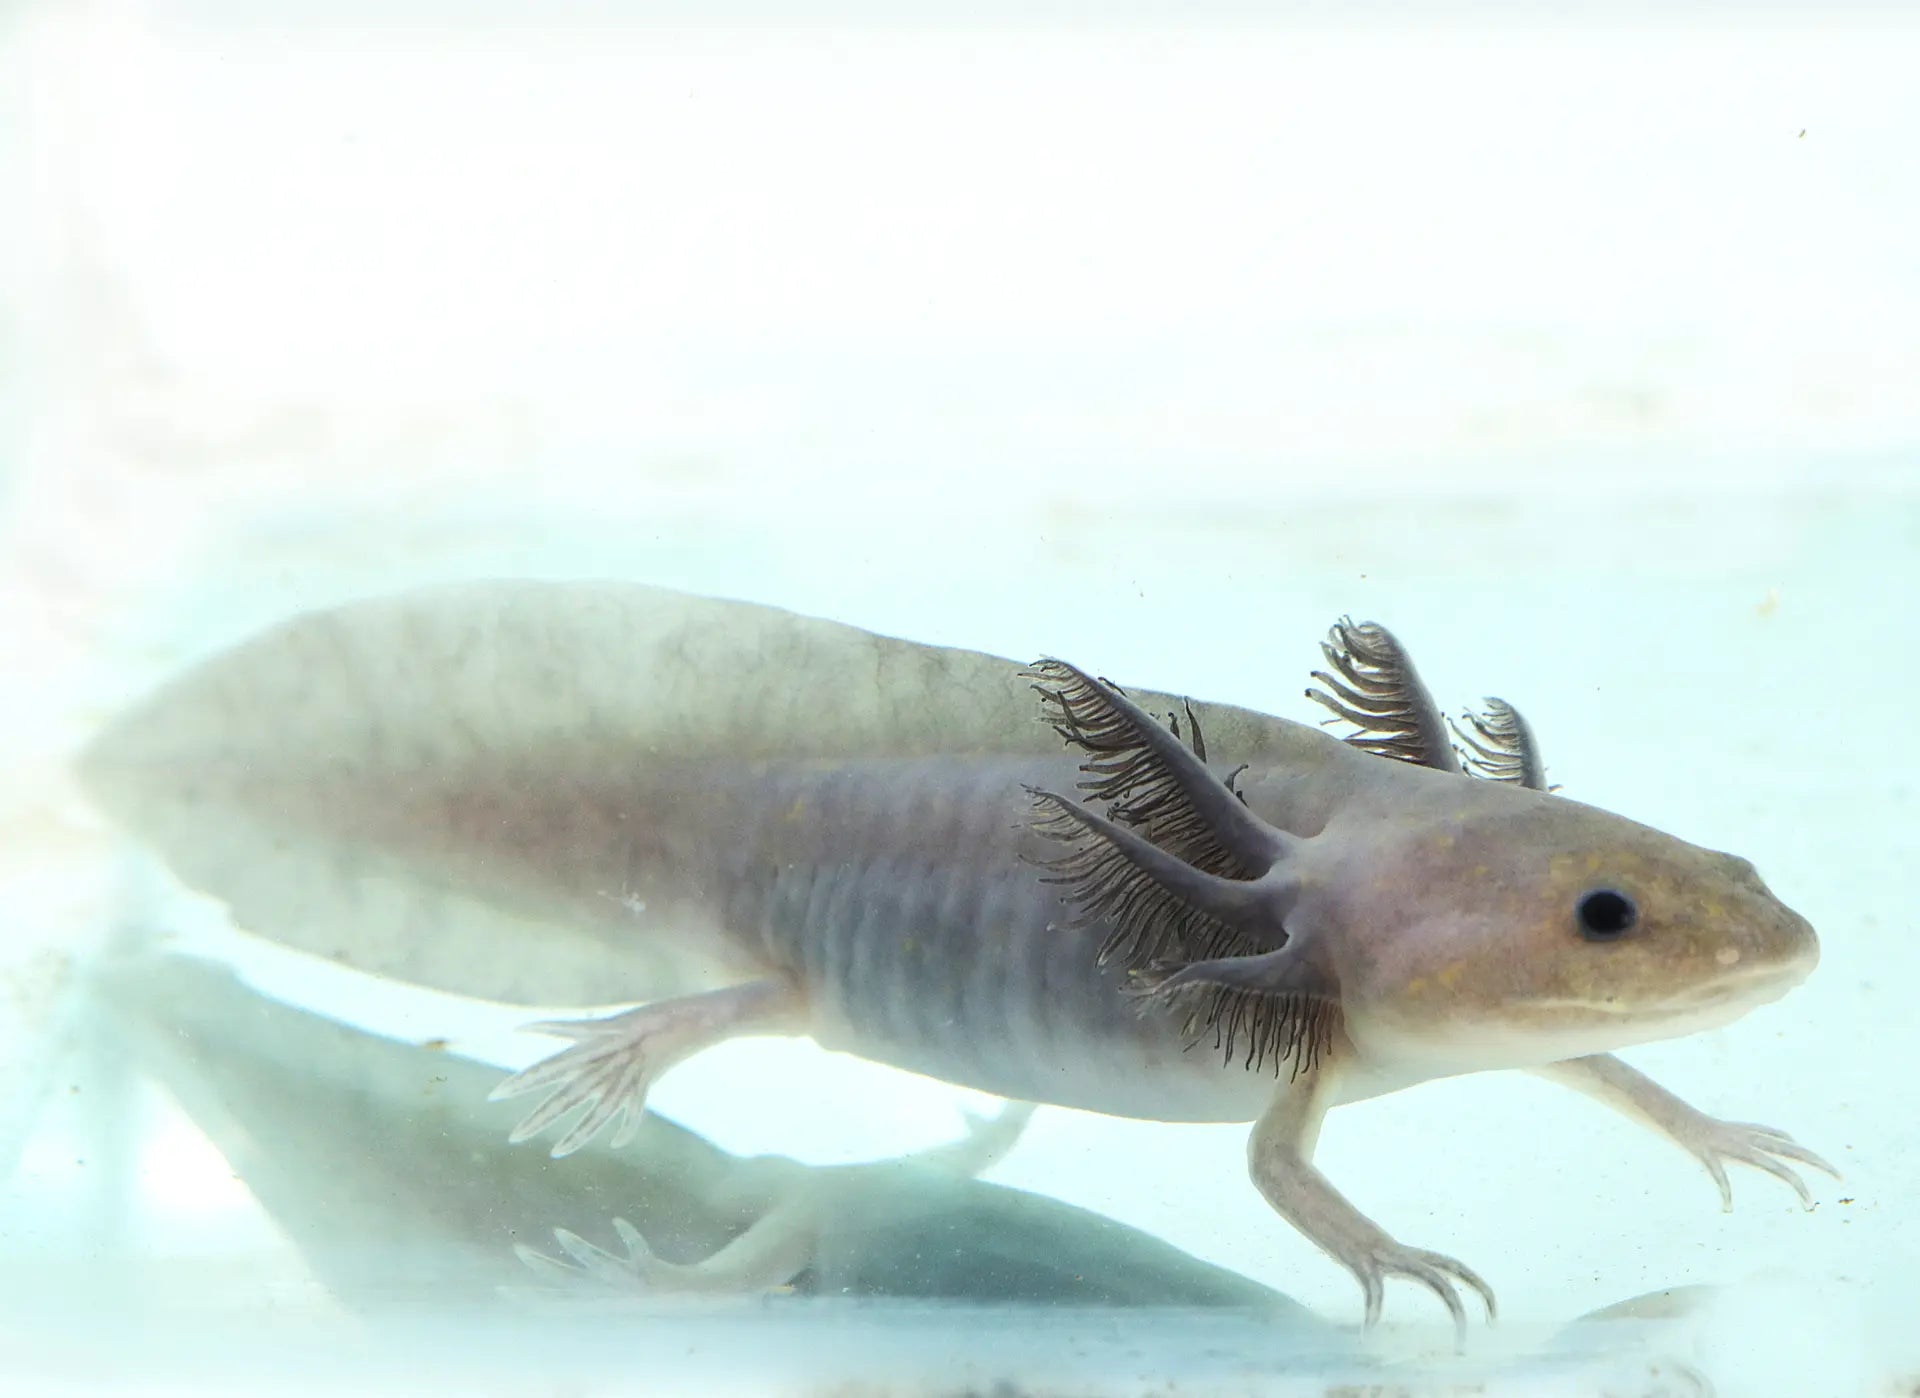 Hypomelanistic Melanoid Axolotl